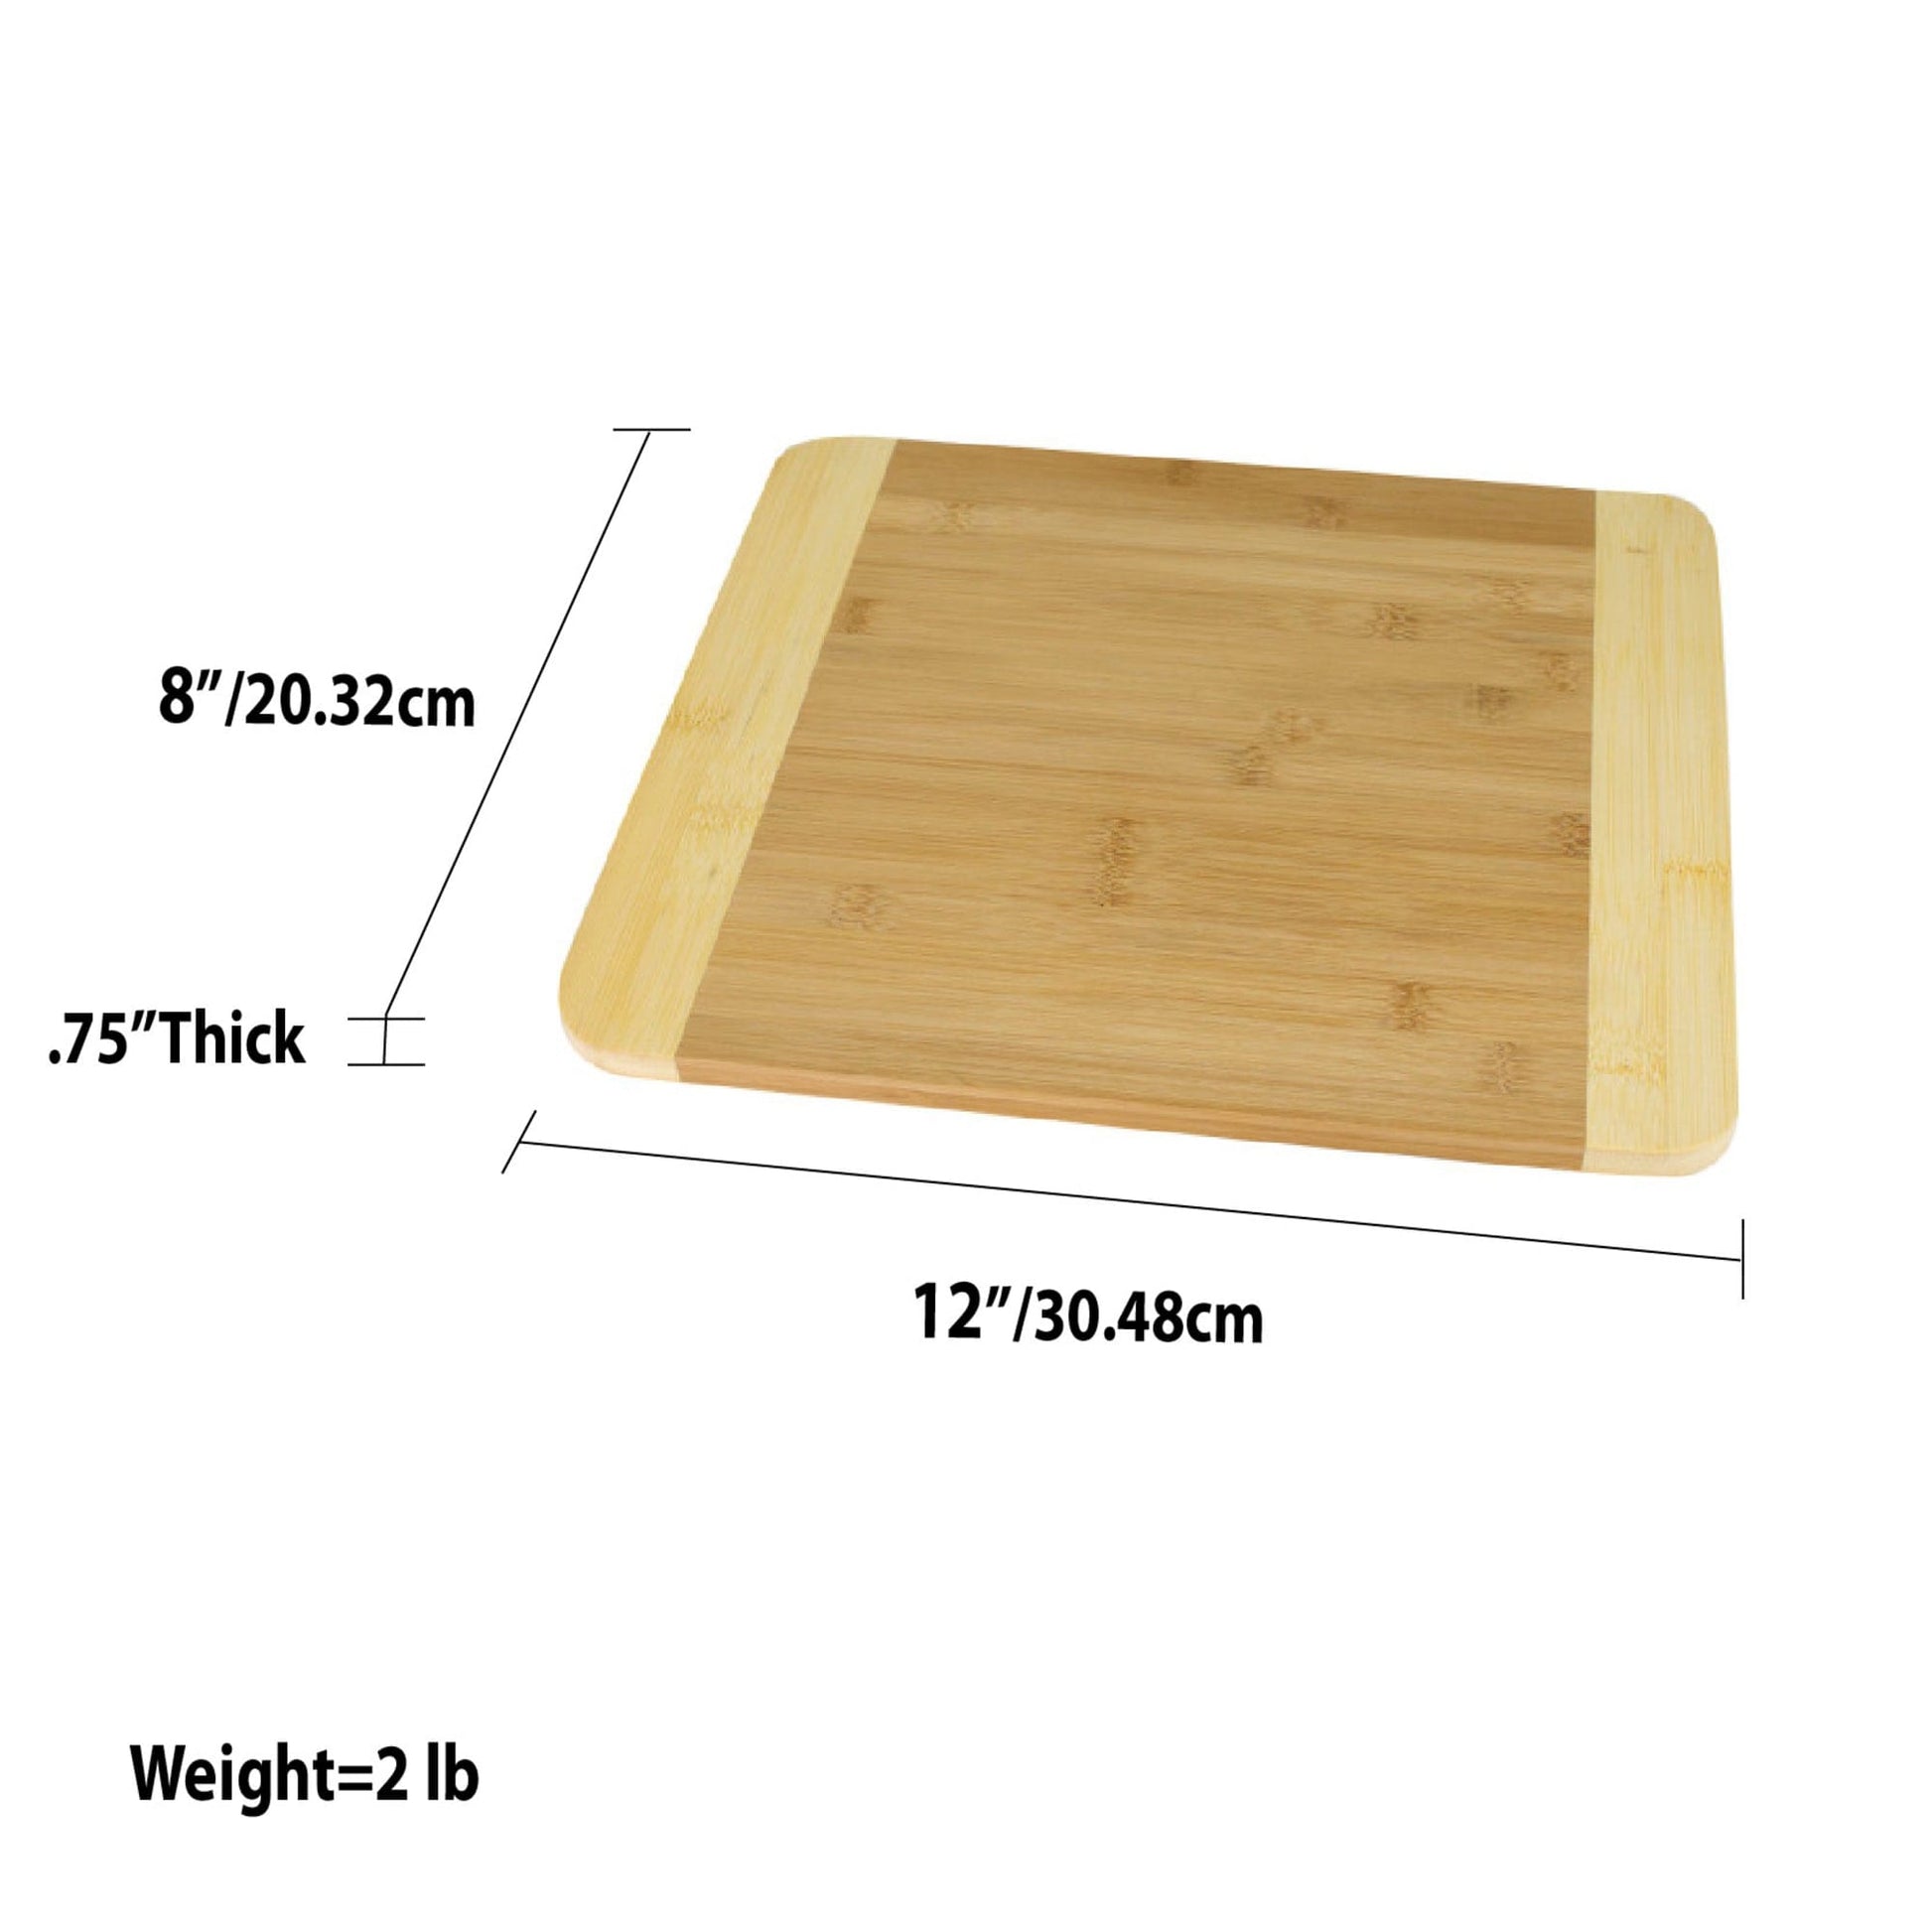 Home Basics 3 Piece Bamboo Cutting Board Set, Natural